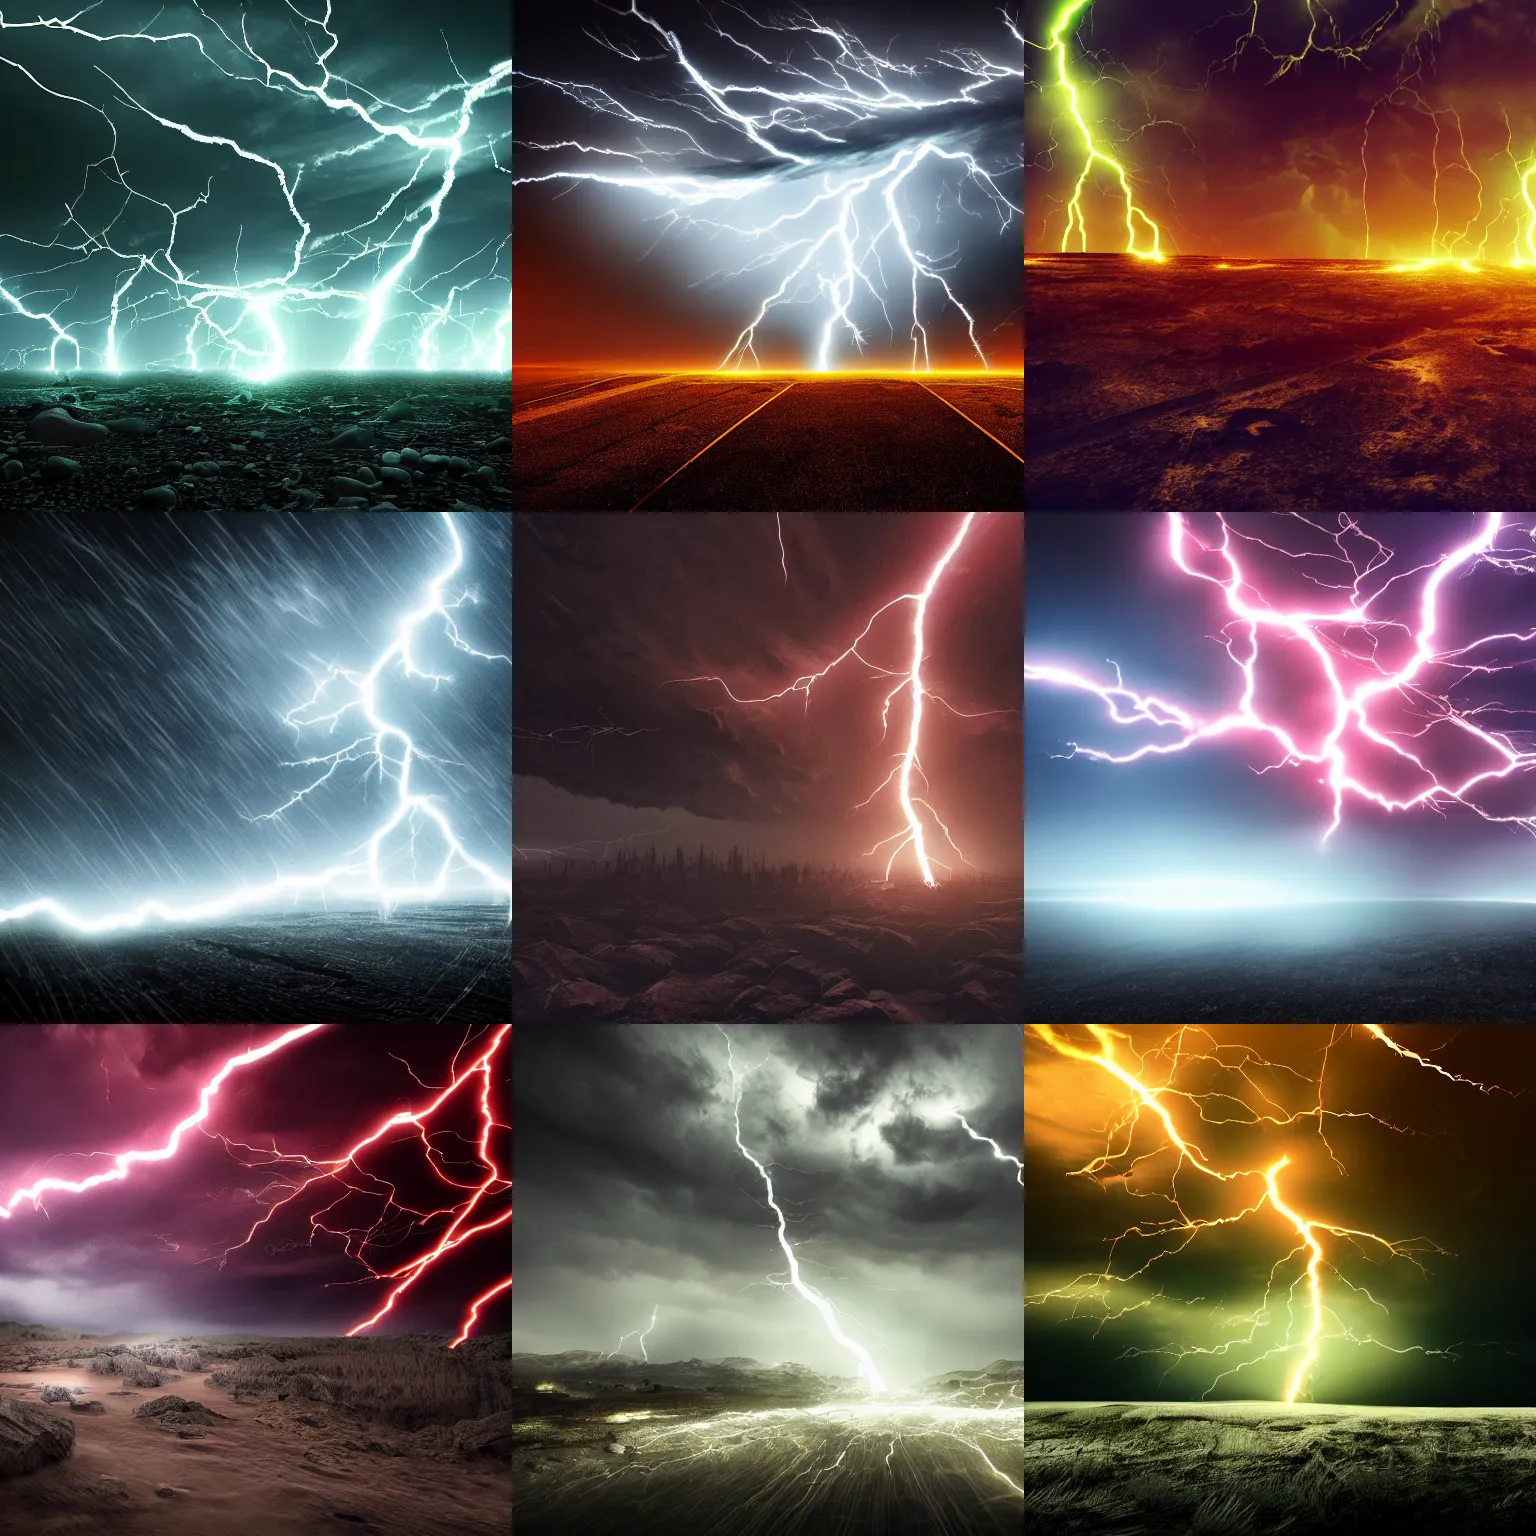 Prompt: dark and hostile environment with lightfull electric storm, lightining, energy, power, 4 k